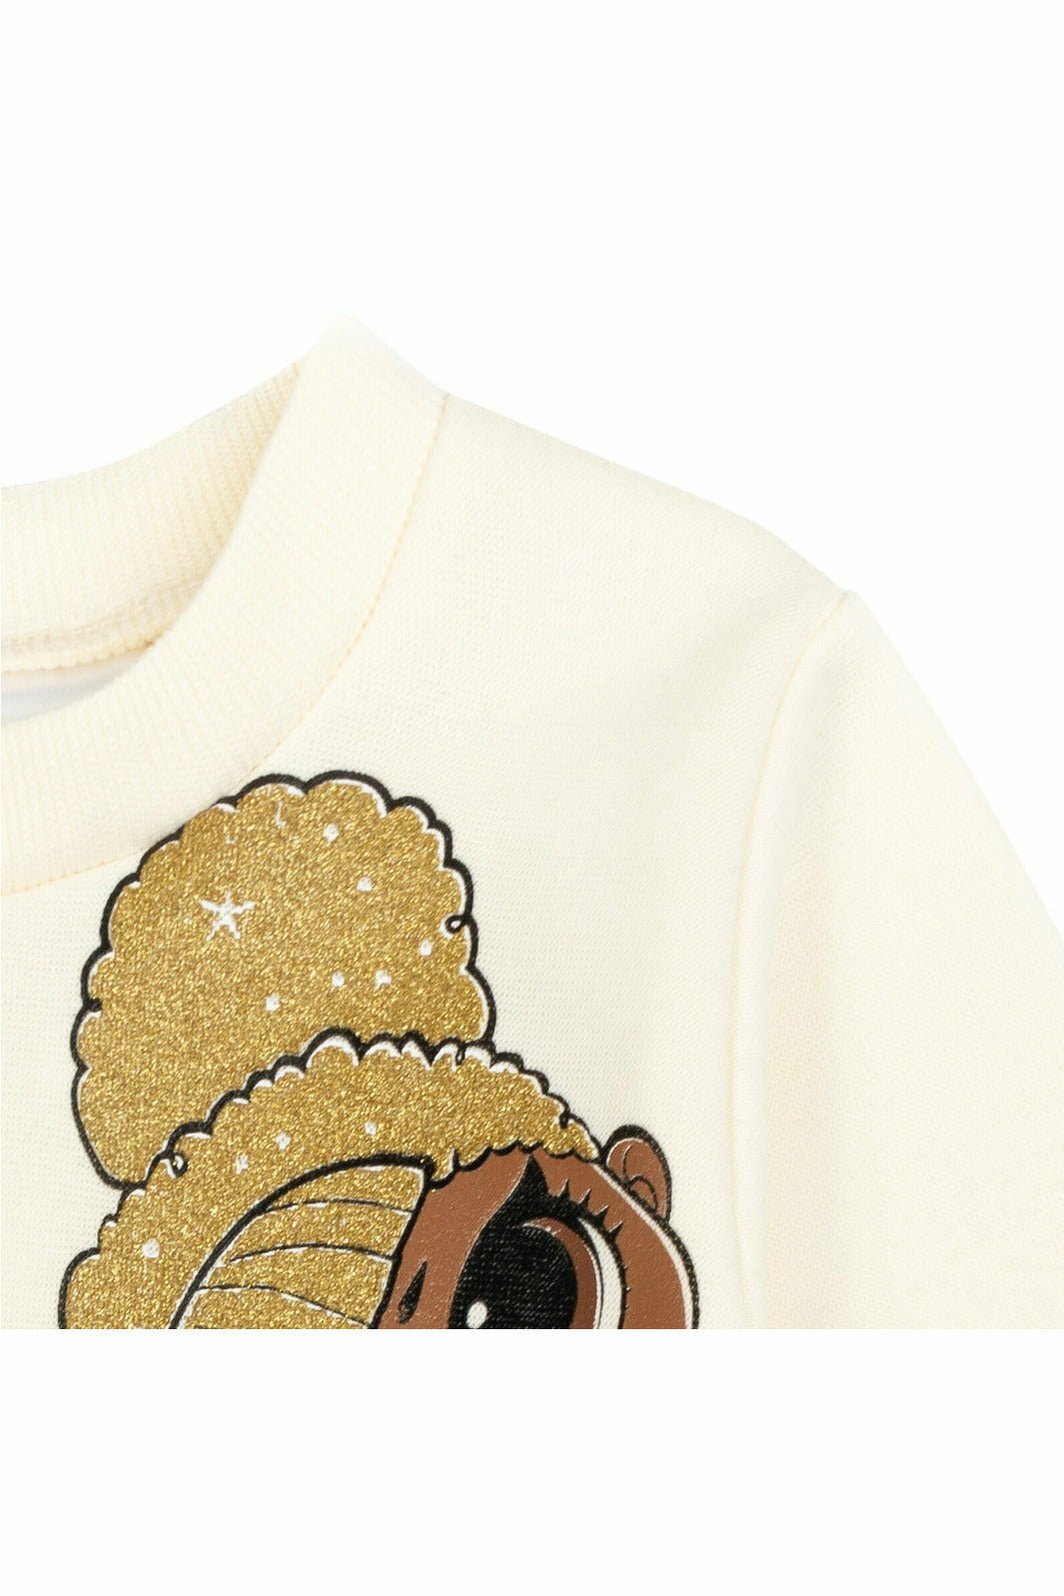 L.O.L. Surprise! Fleece Fashion Pullover Sweatshirt & Pants - imagikids